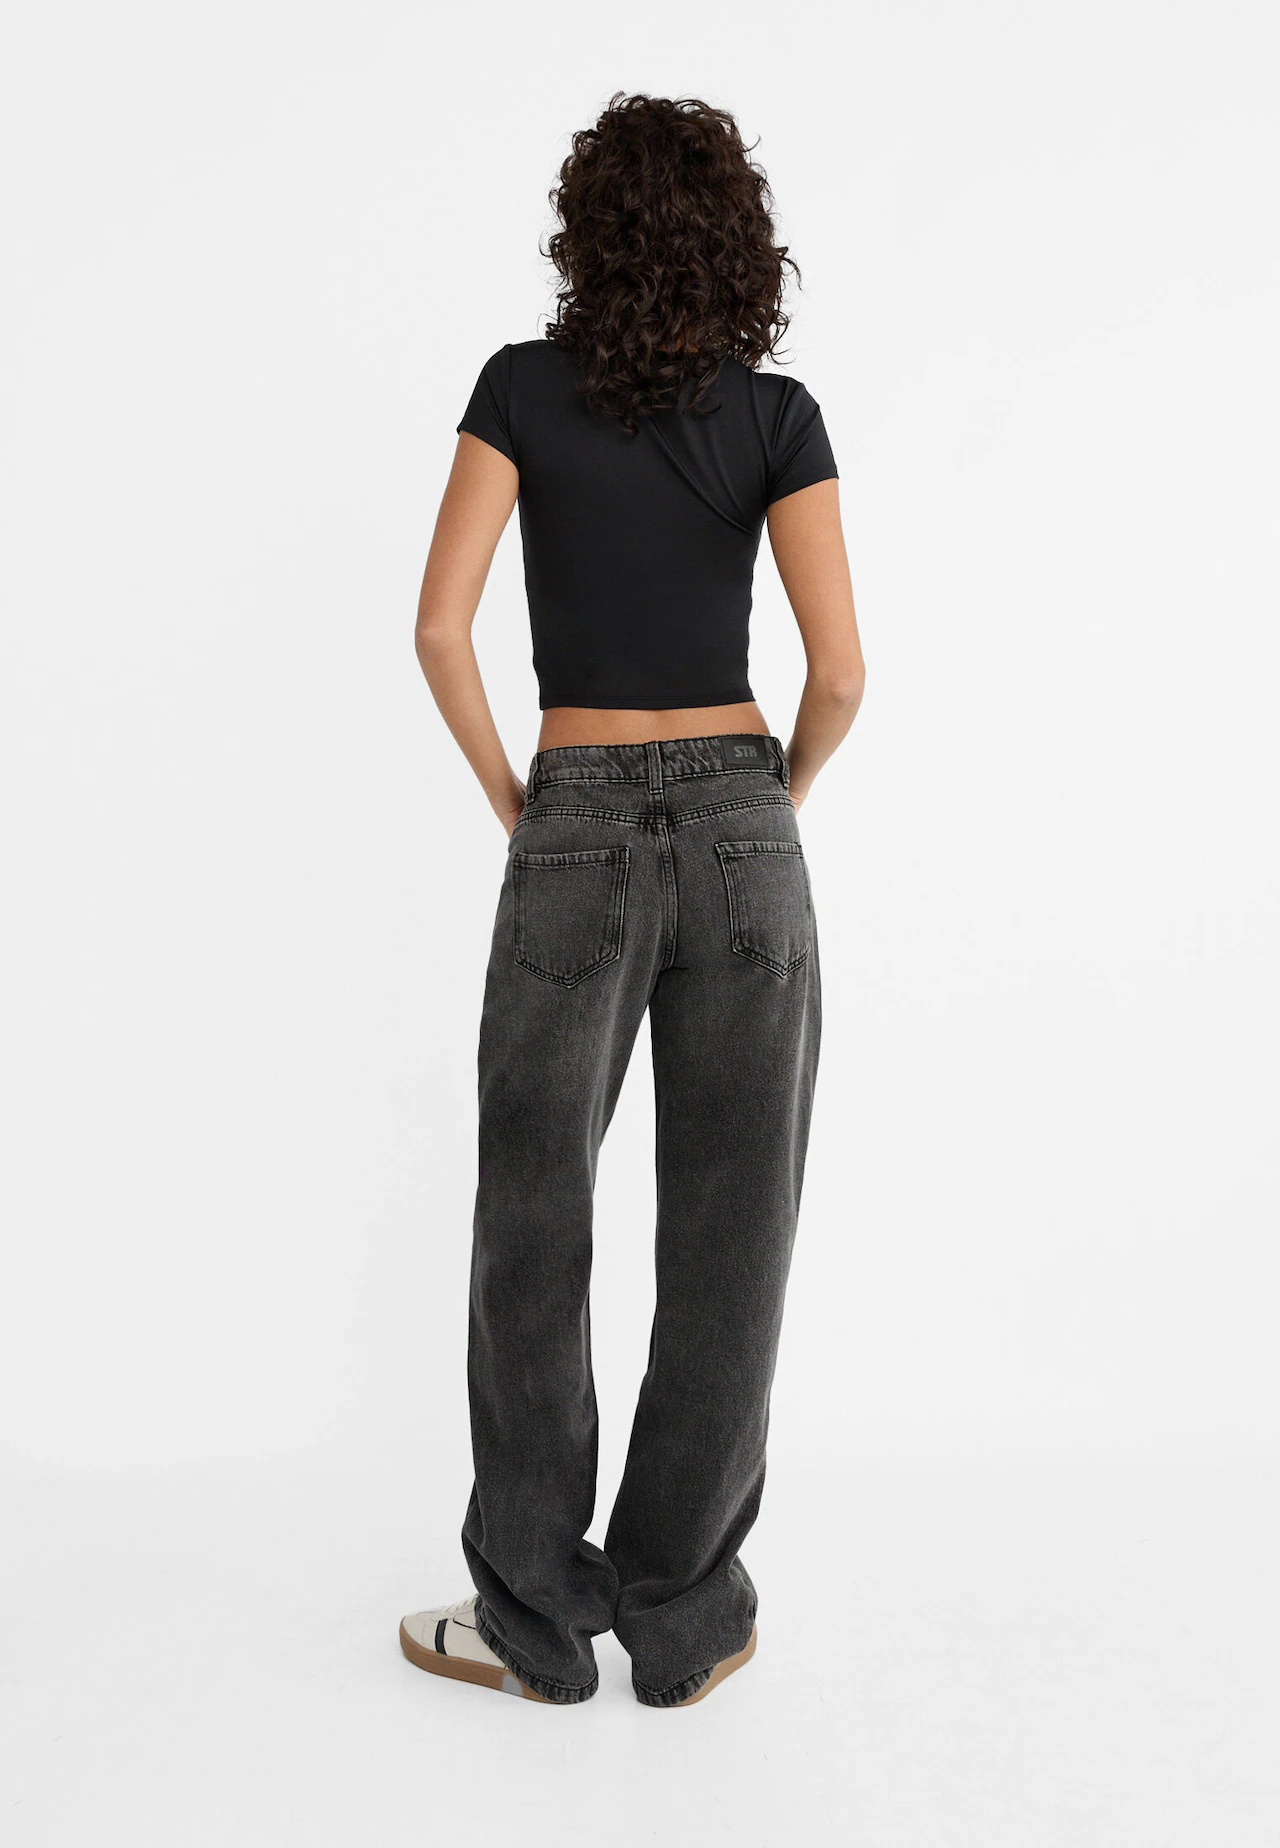 Mid-rise jeans - Women's fashion